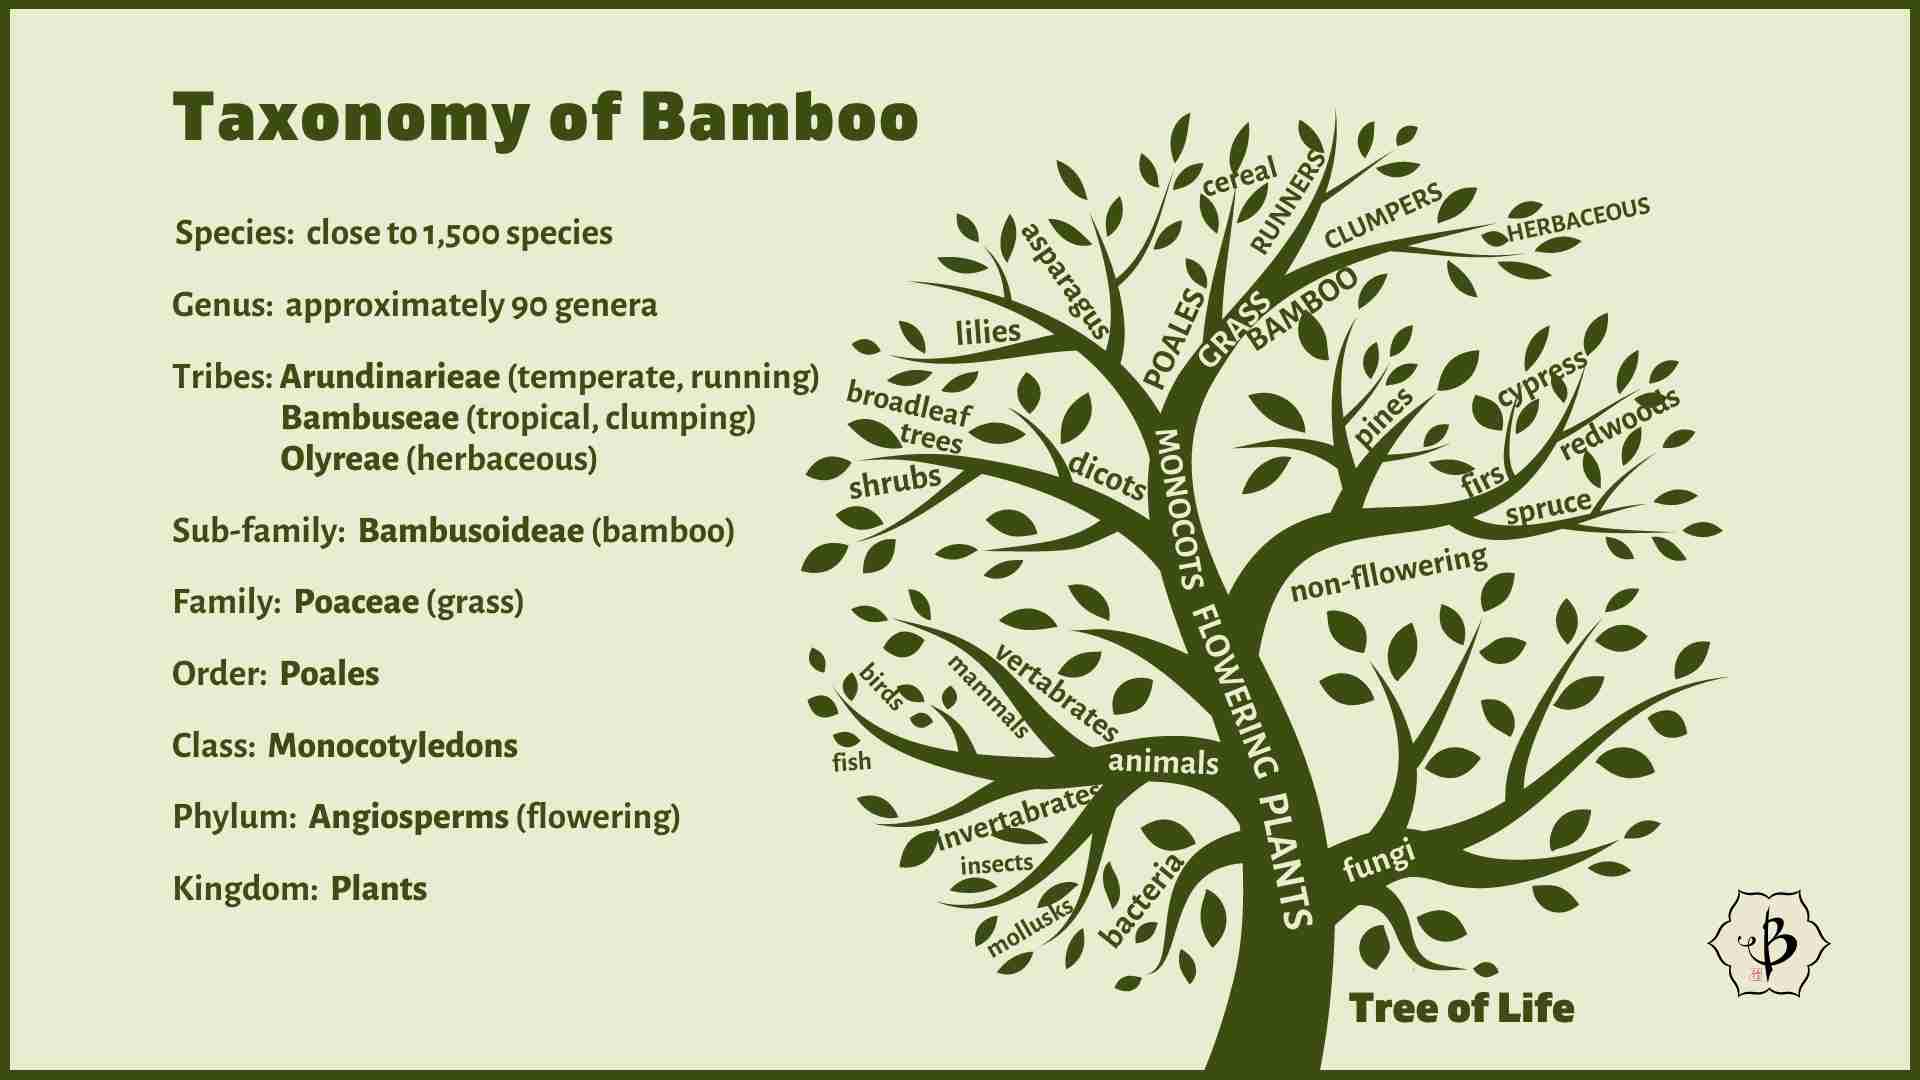 Bamboo taxonomy infographic